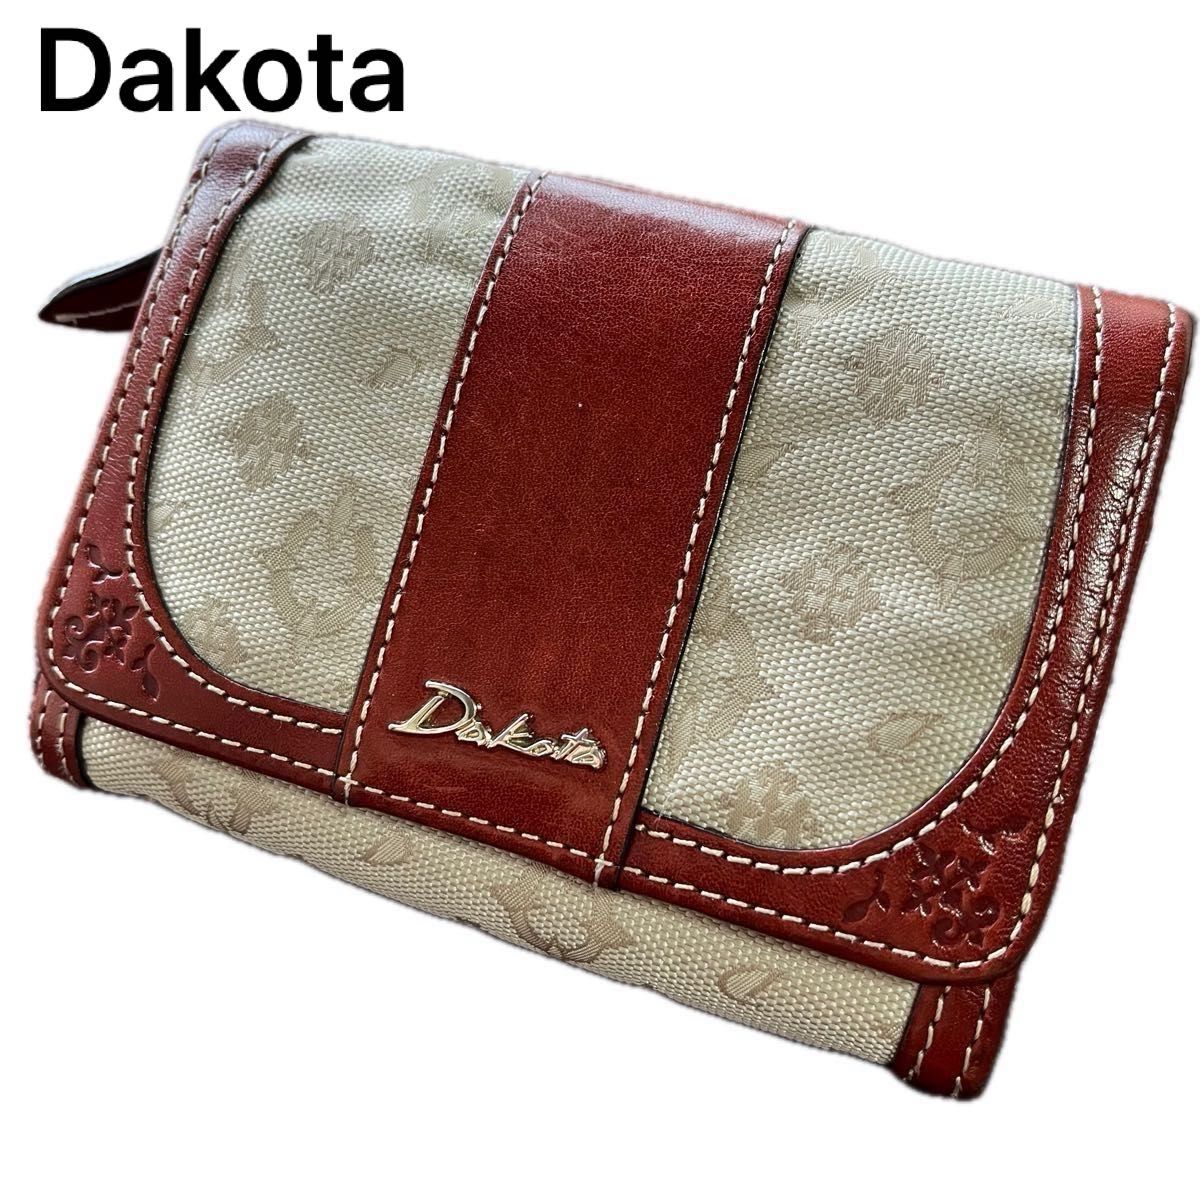 Dakota 二つ折り財布 キャンバス レザー ロゴ 型押し 高級 ブランド オシャレ ダコタ ブラウン ベージュ